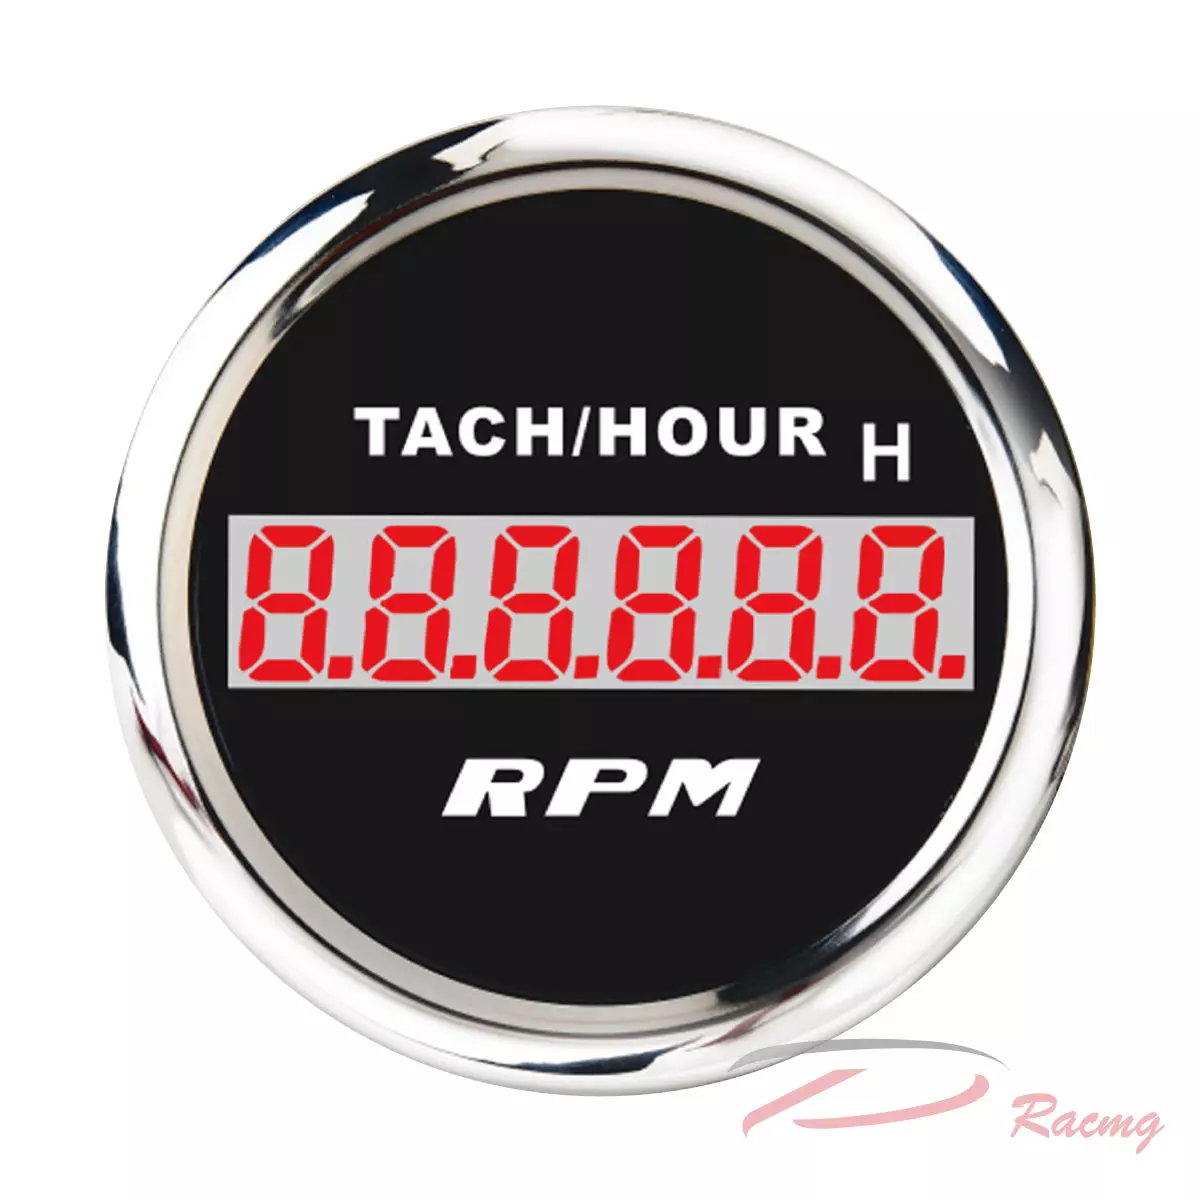 Dracing, Depo racing, AutoMeter, performance tachometers, accurate tachometers, durable tachometers, Tachometers, professional racing tachometers, playback tachometers, Ultra-lite tachometers, Pro-Comp tachometers, Cobalt tachometers, Carbon Fiber tachometers, car tachometers, truck tachometers, suv tachometers, monster tachometers, motorcycle tachometers, 5" tachometers, RPM tachometer, 4" tachometers, 3.175" tachometers, 3-3/4" tachometers, 3-3/8" tachometers, 3-1/8" tachometers, 2-5/8" tachometers, 2-1/16" tachometers, air-core tachometers, digital-stepper motor tachometers, analog tachometers, digital tachometers, best tachometers